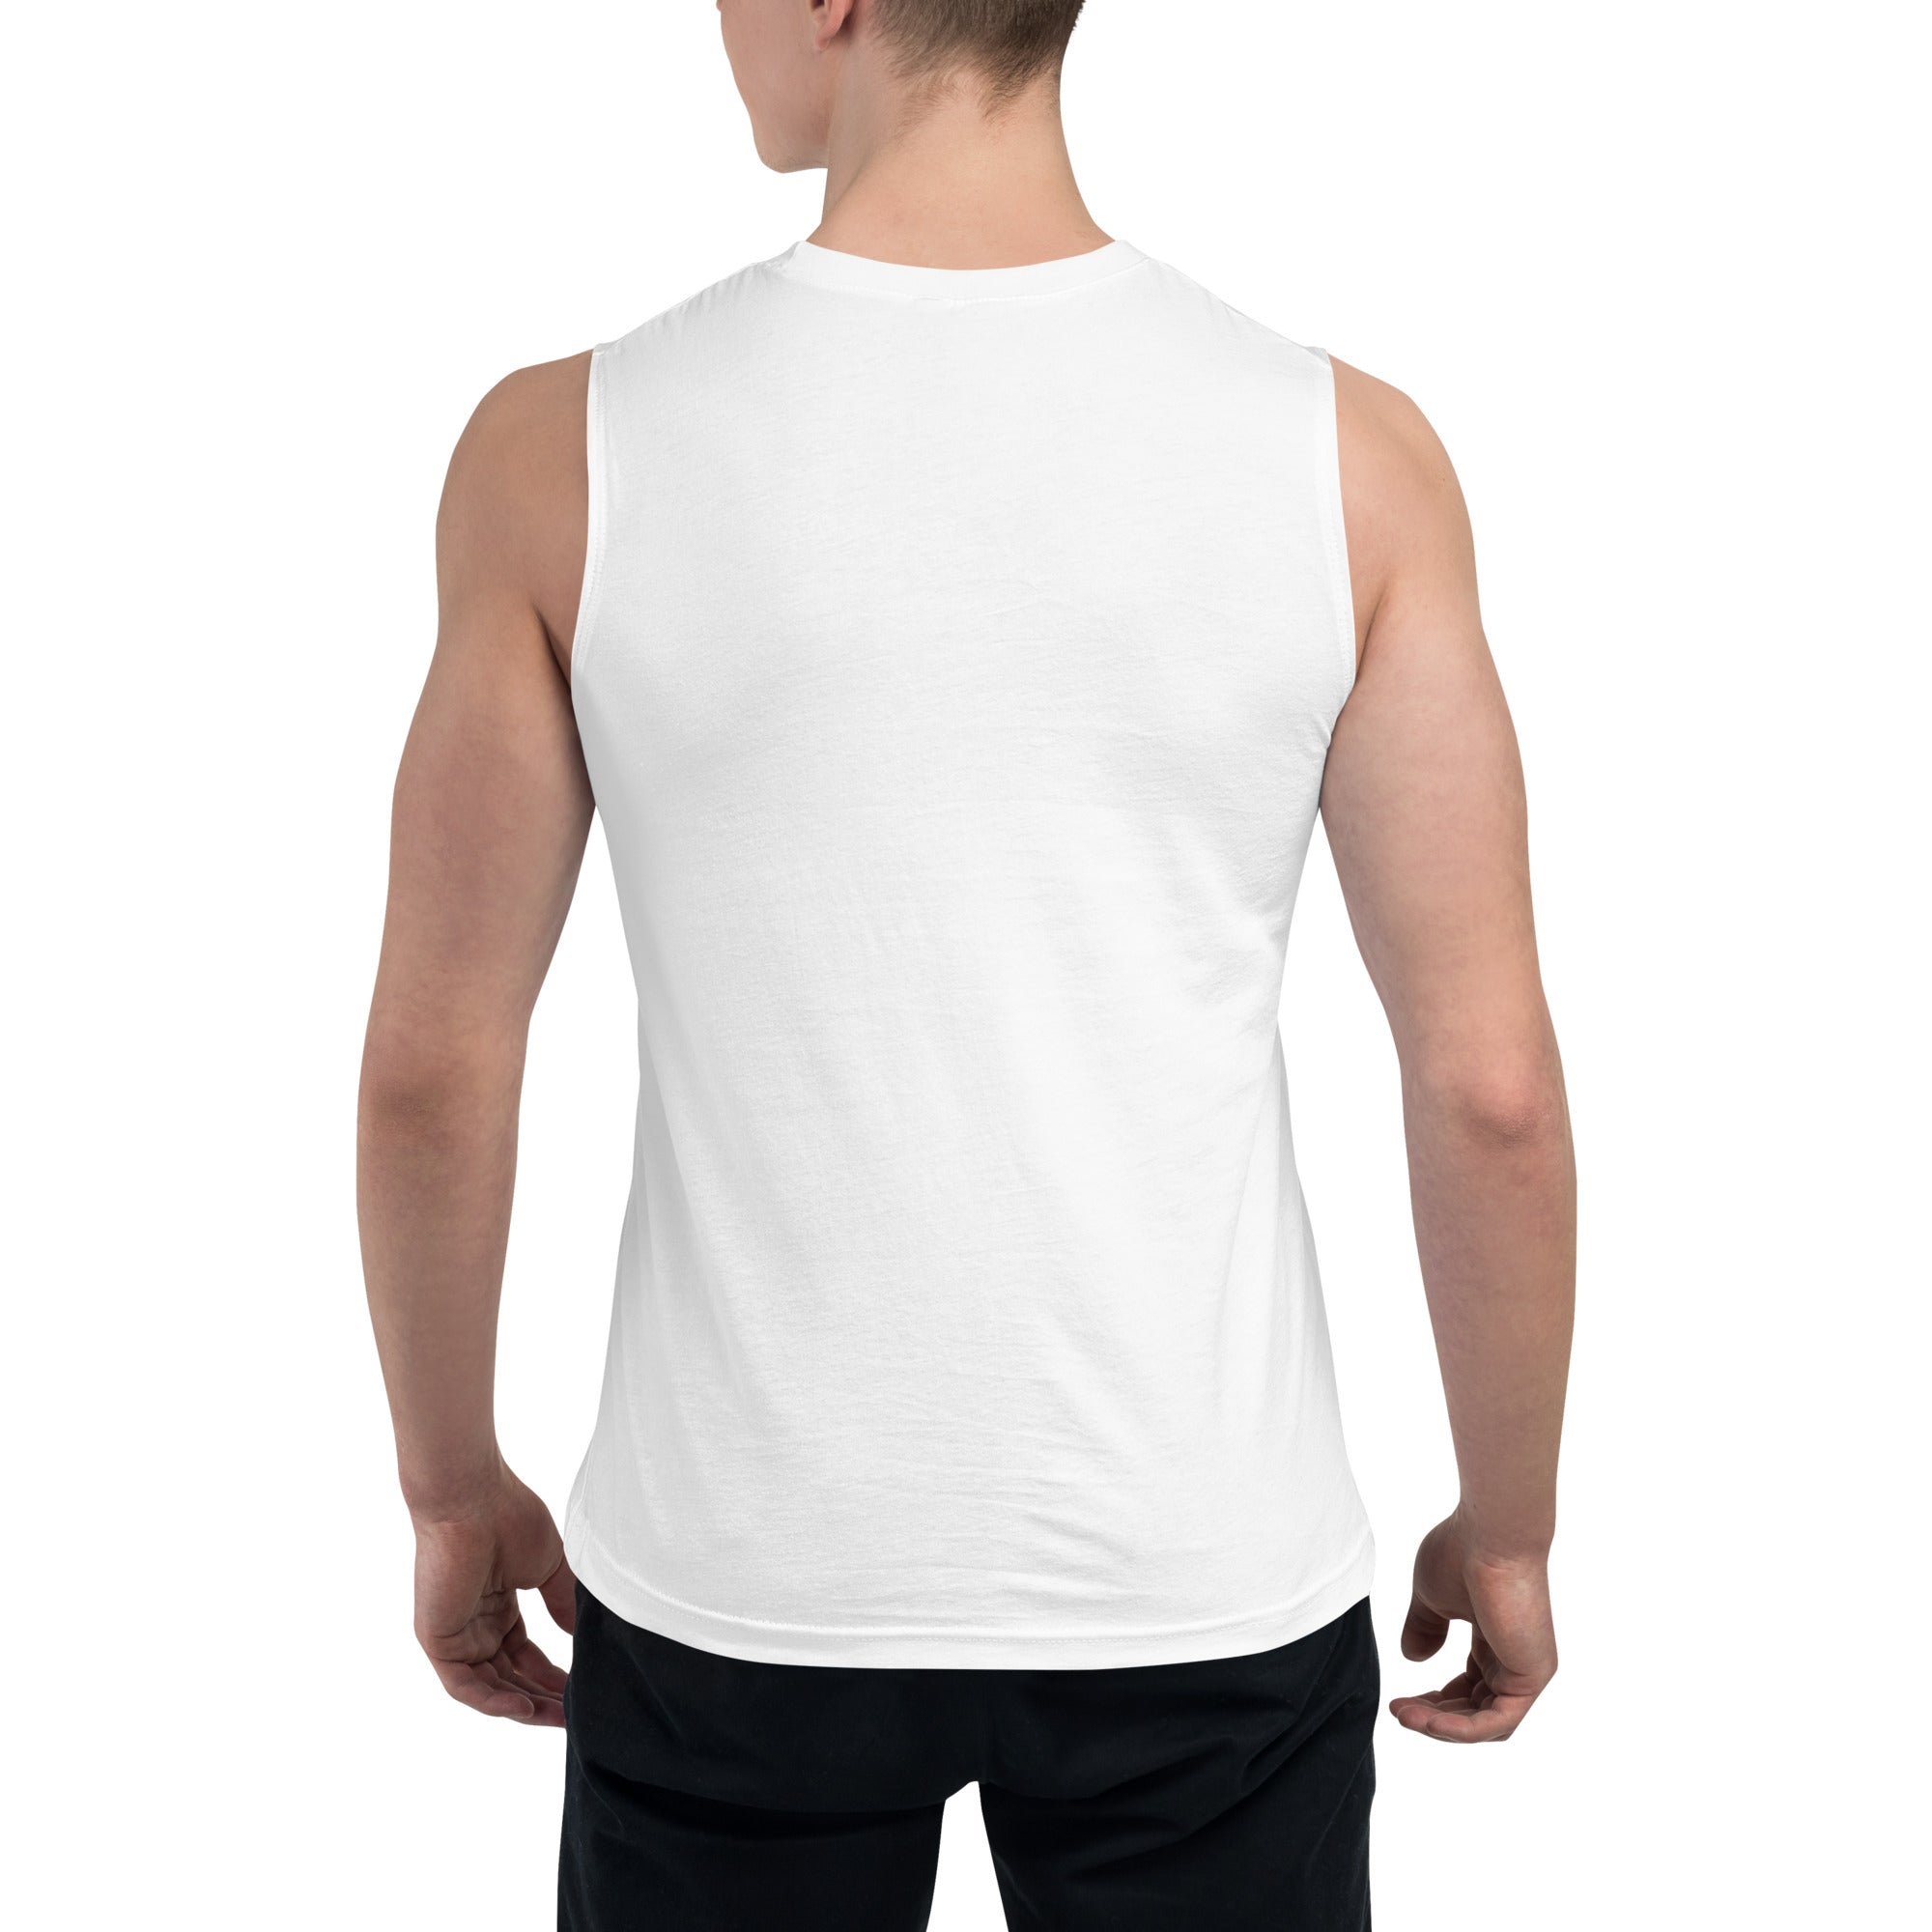 T-shirt Sleeveless shirt Outerwear, Roblox Muscle, tshirt, white